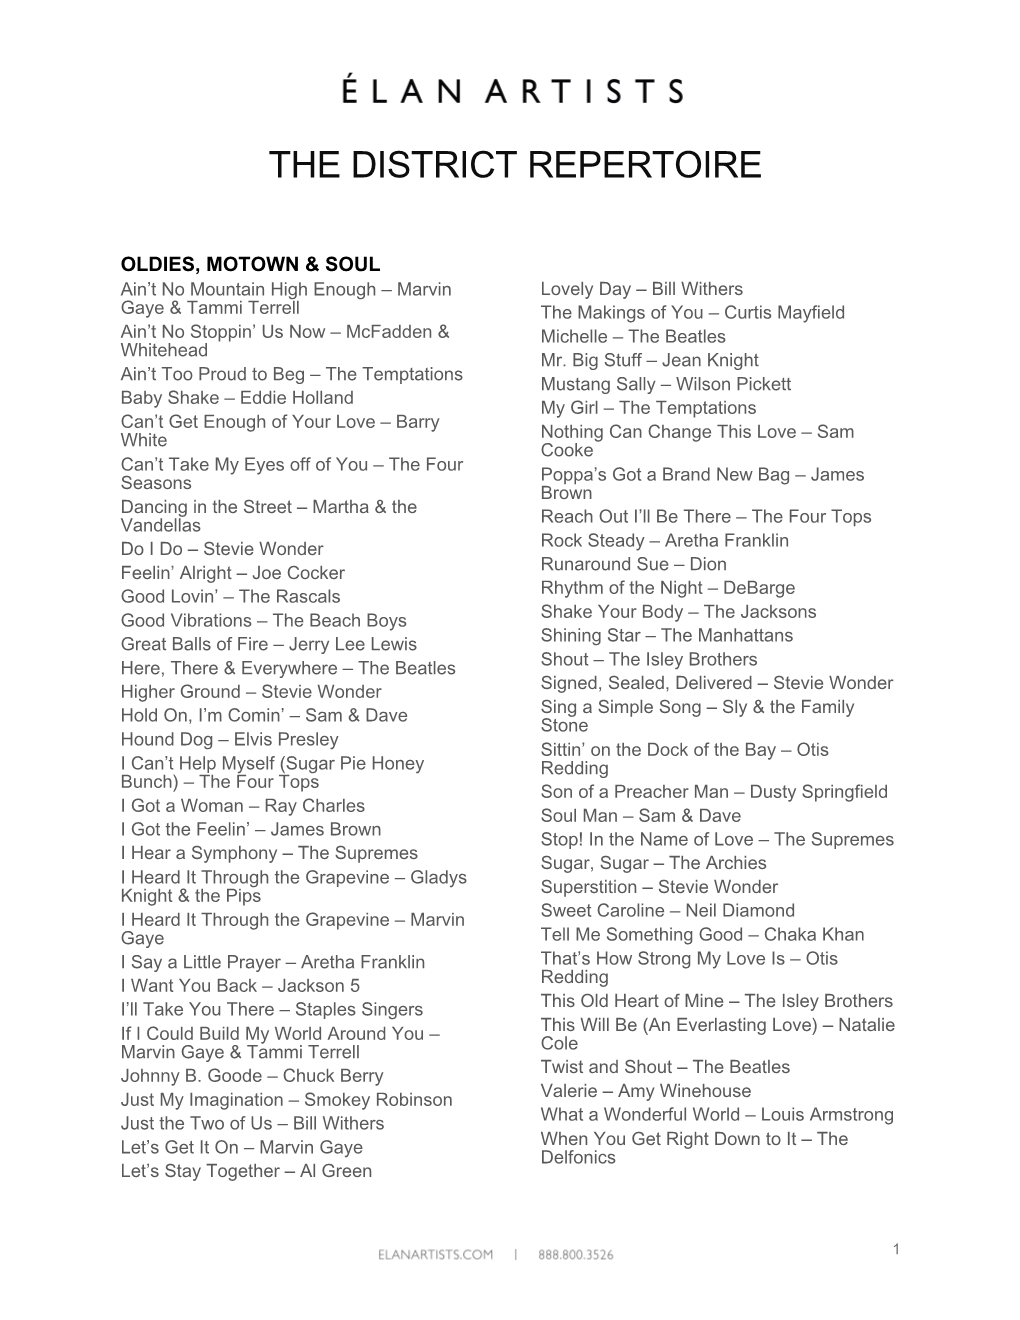 The District Repertoire